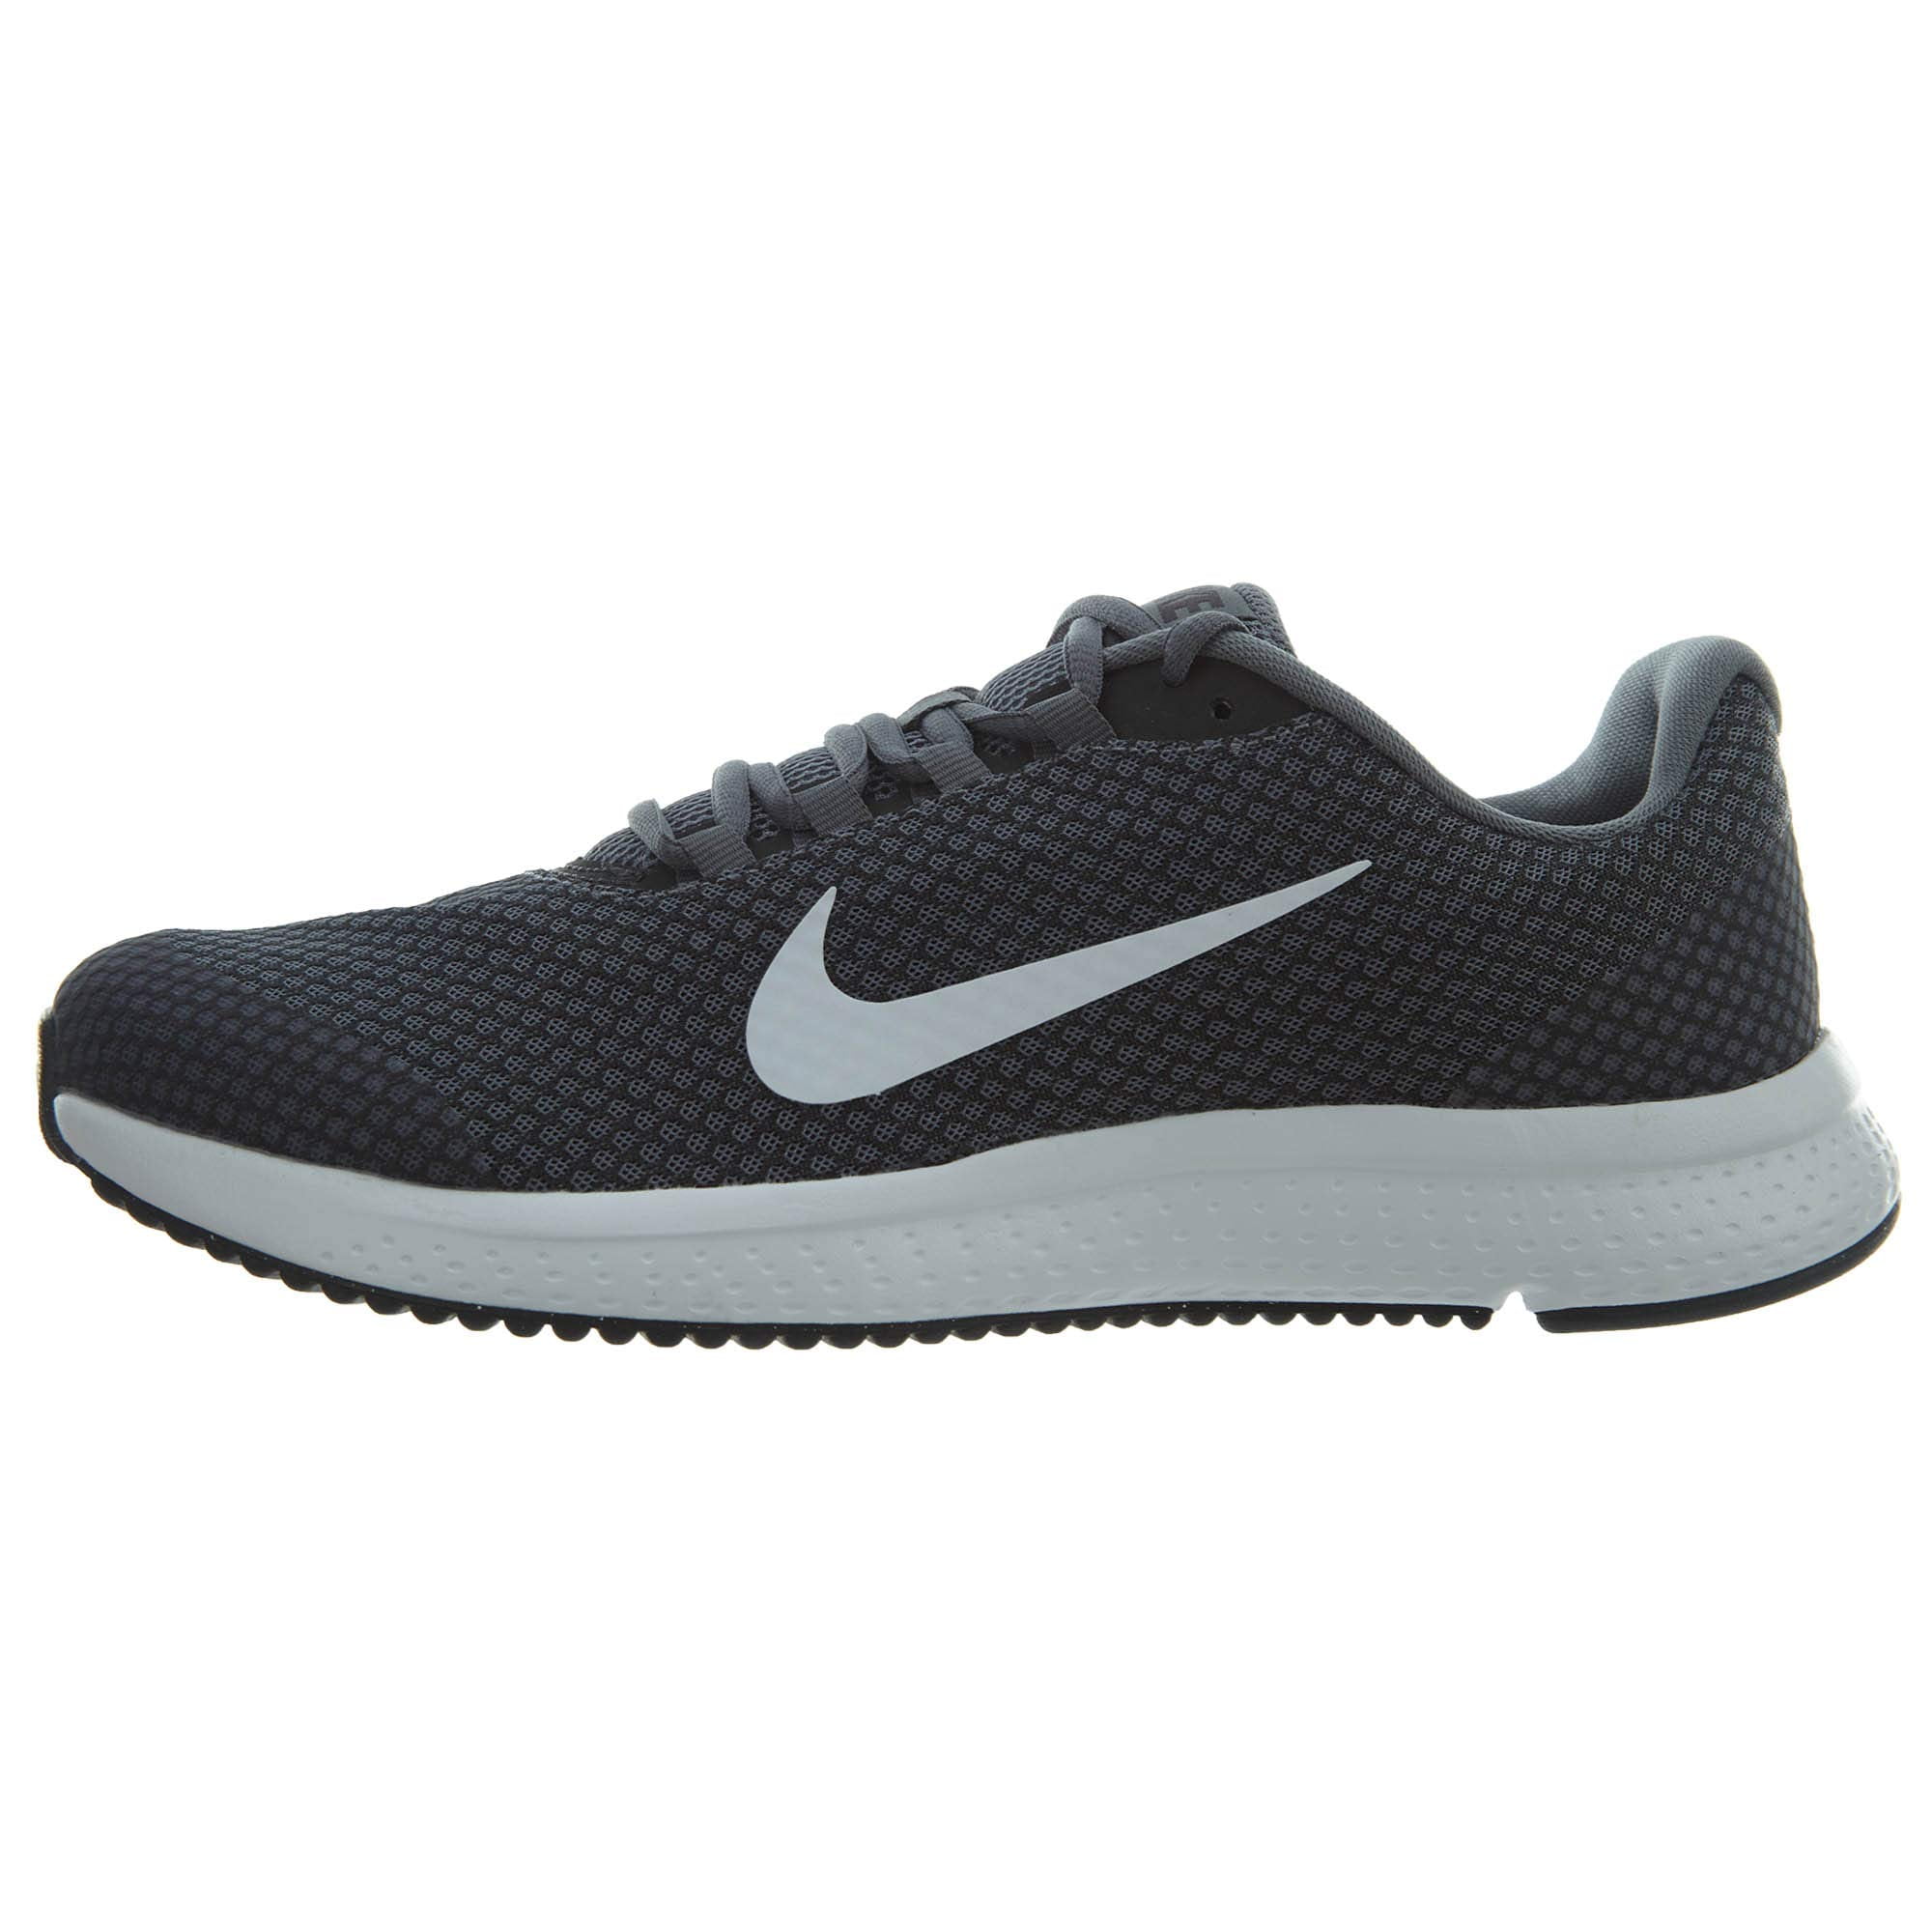 Nike Mens RunAllDay Running Shoe nk898464 013 - Walmart.com